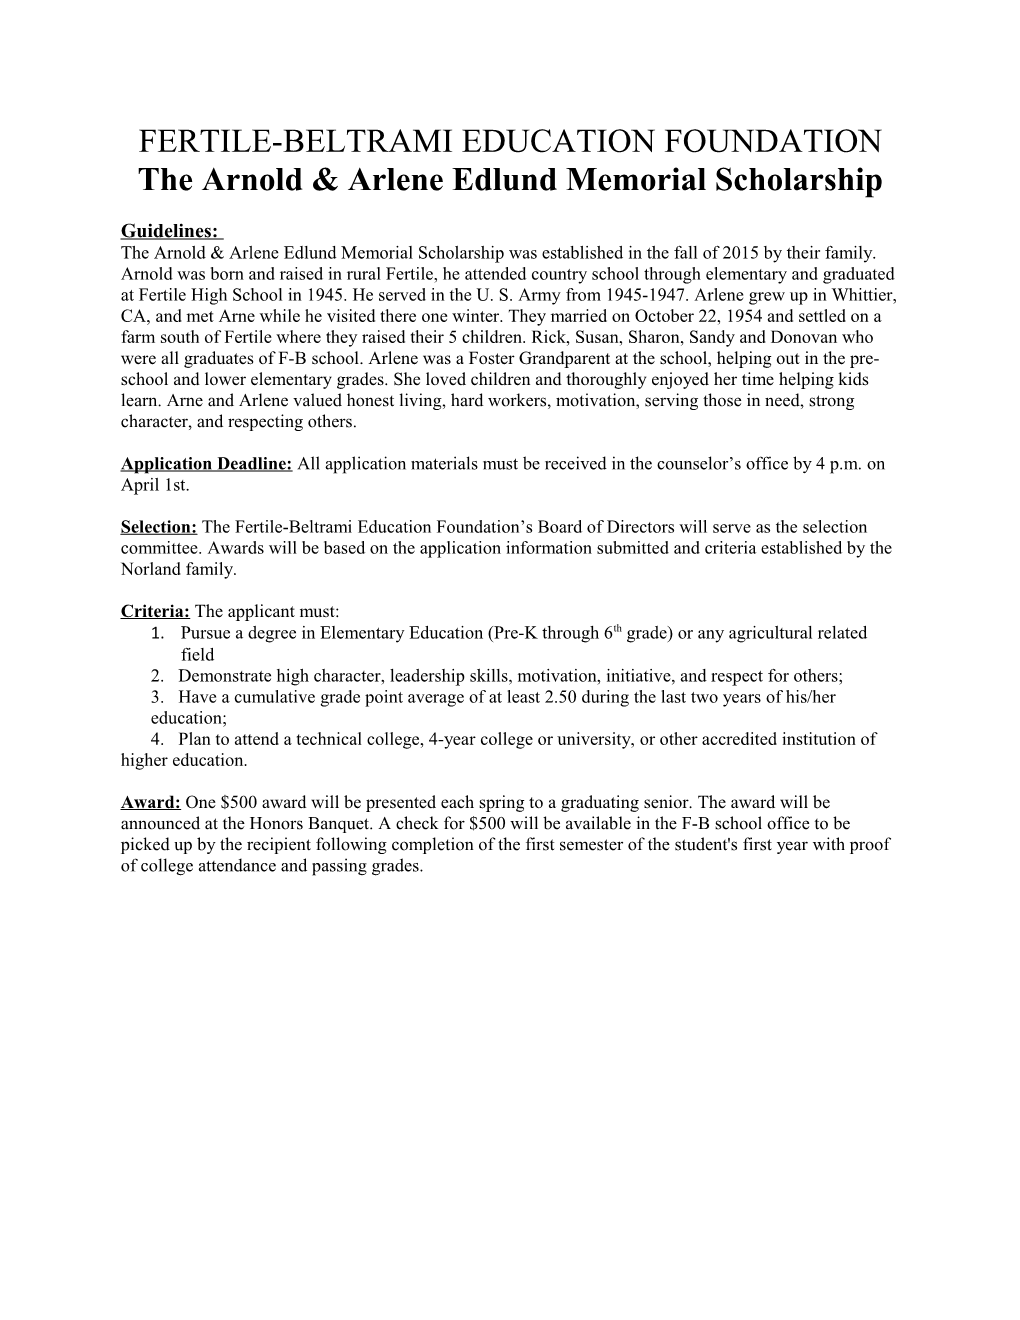 The Arnold & Arlene Edlund Memorial Scholarship